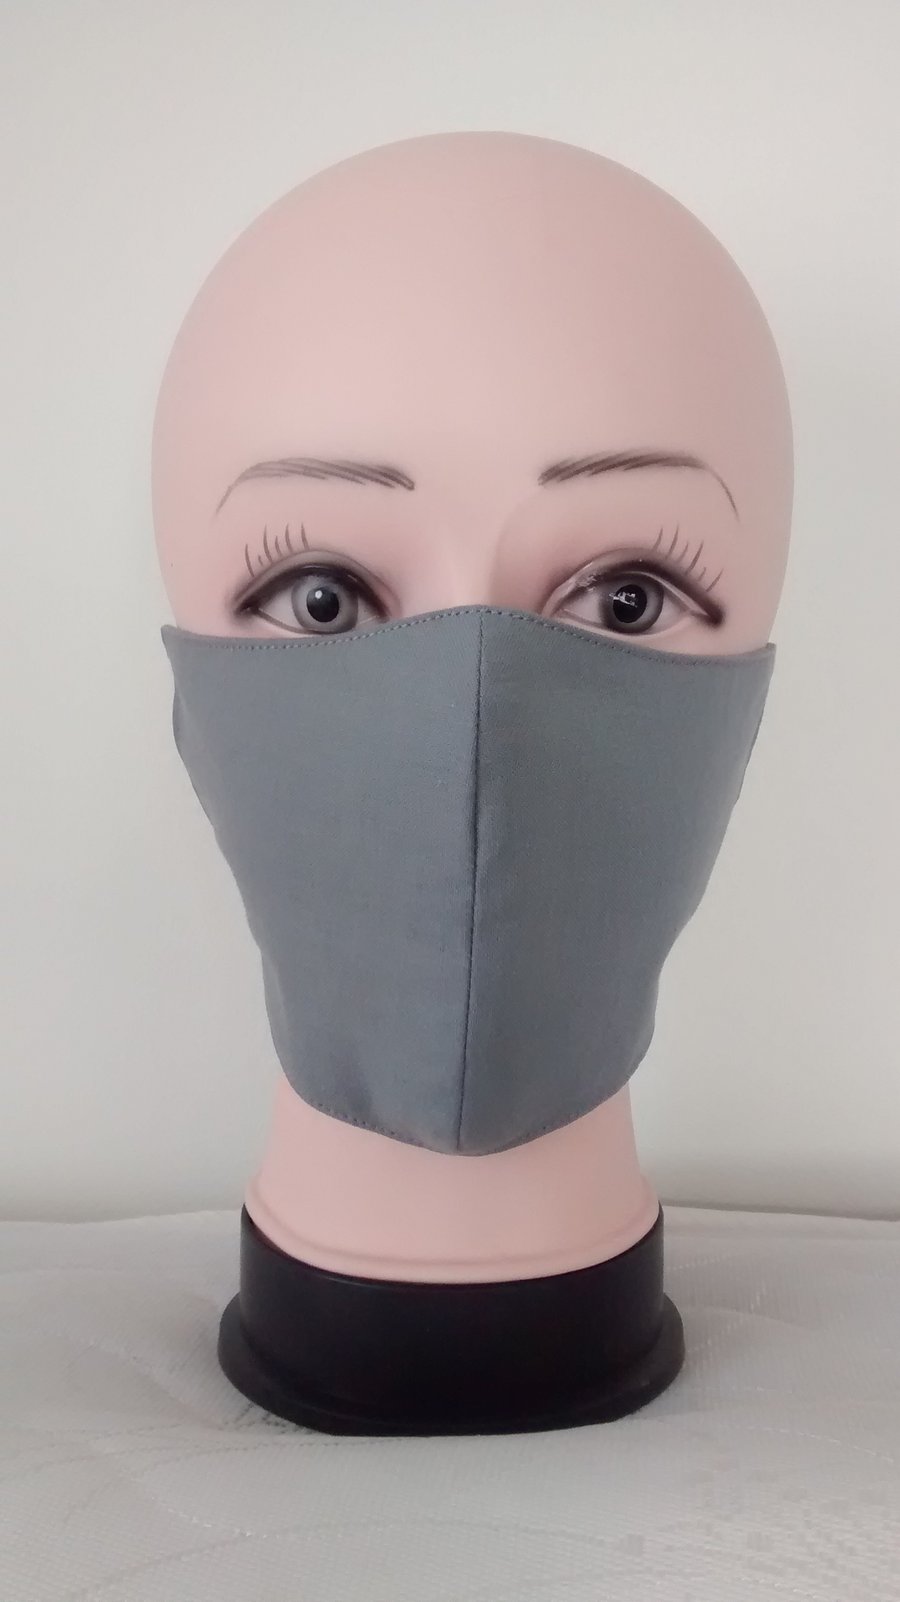 Handmade 3 layers light grey reusable adult face mask